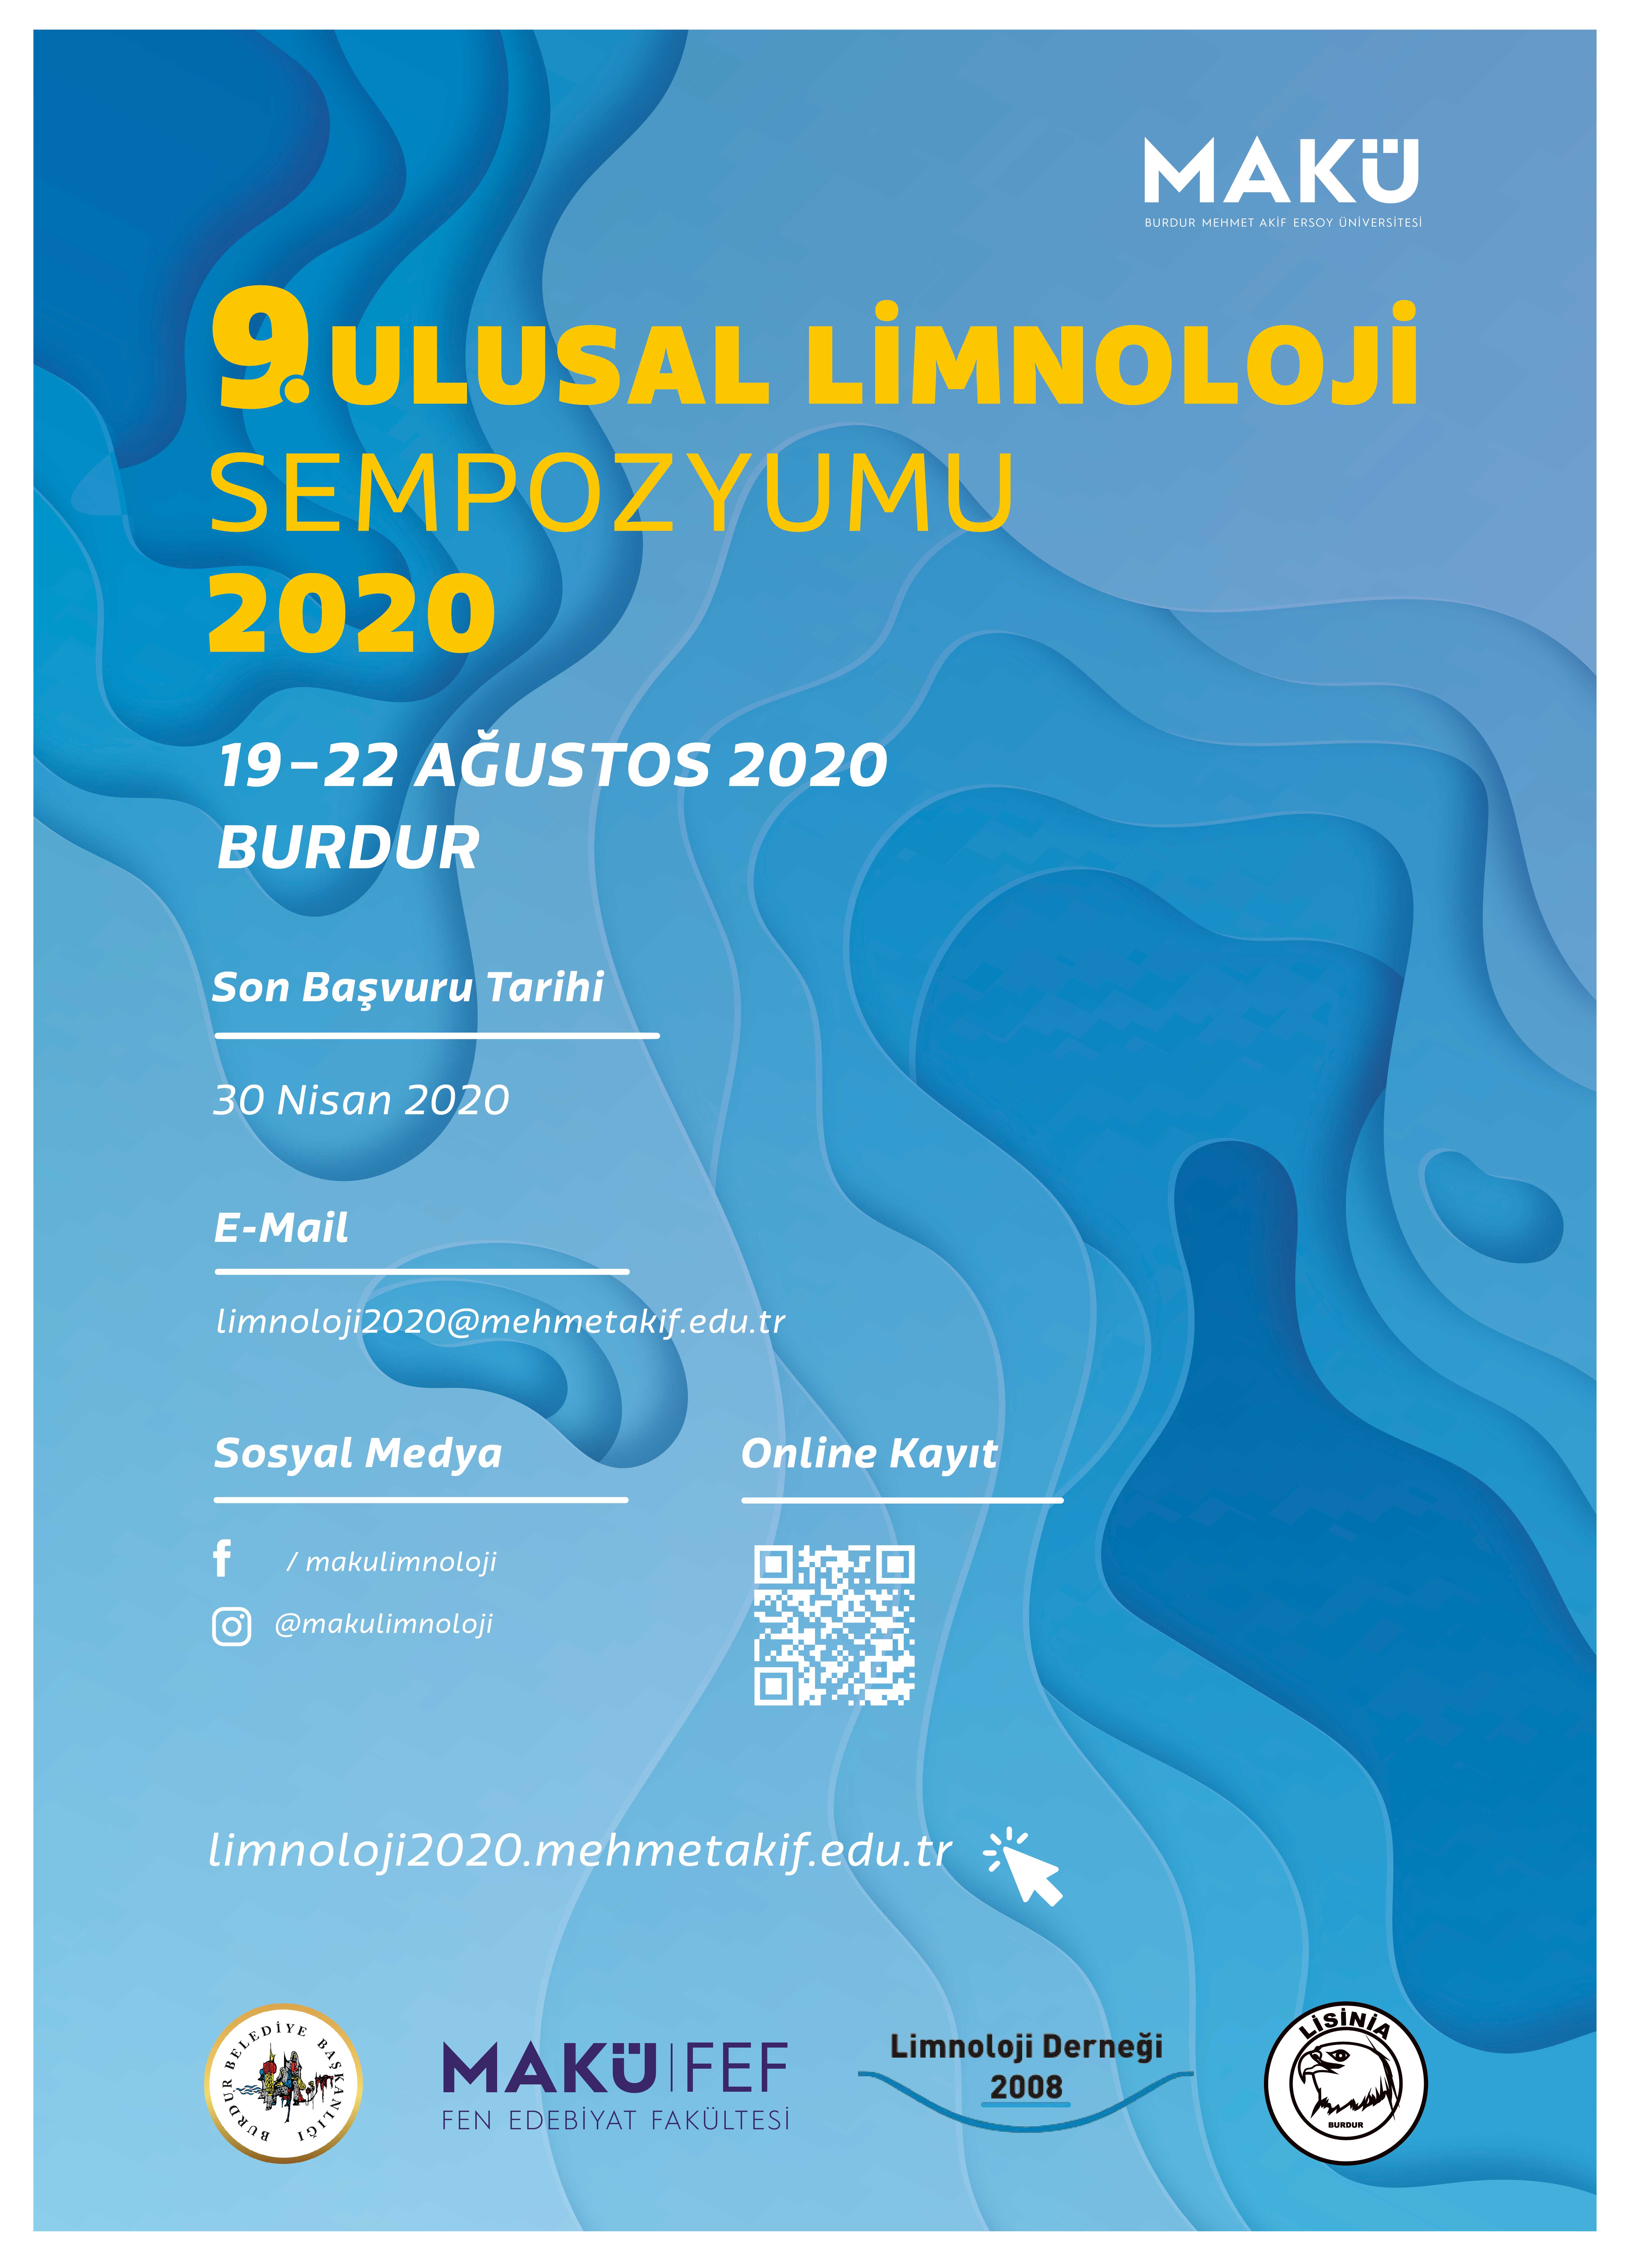 9.Ulusal Limnoloji Sempozyumu 2020 - Burdur